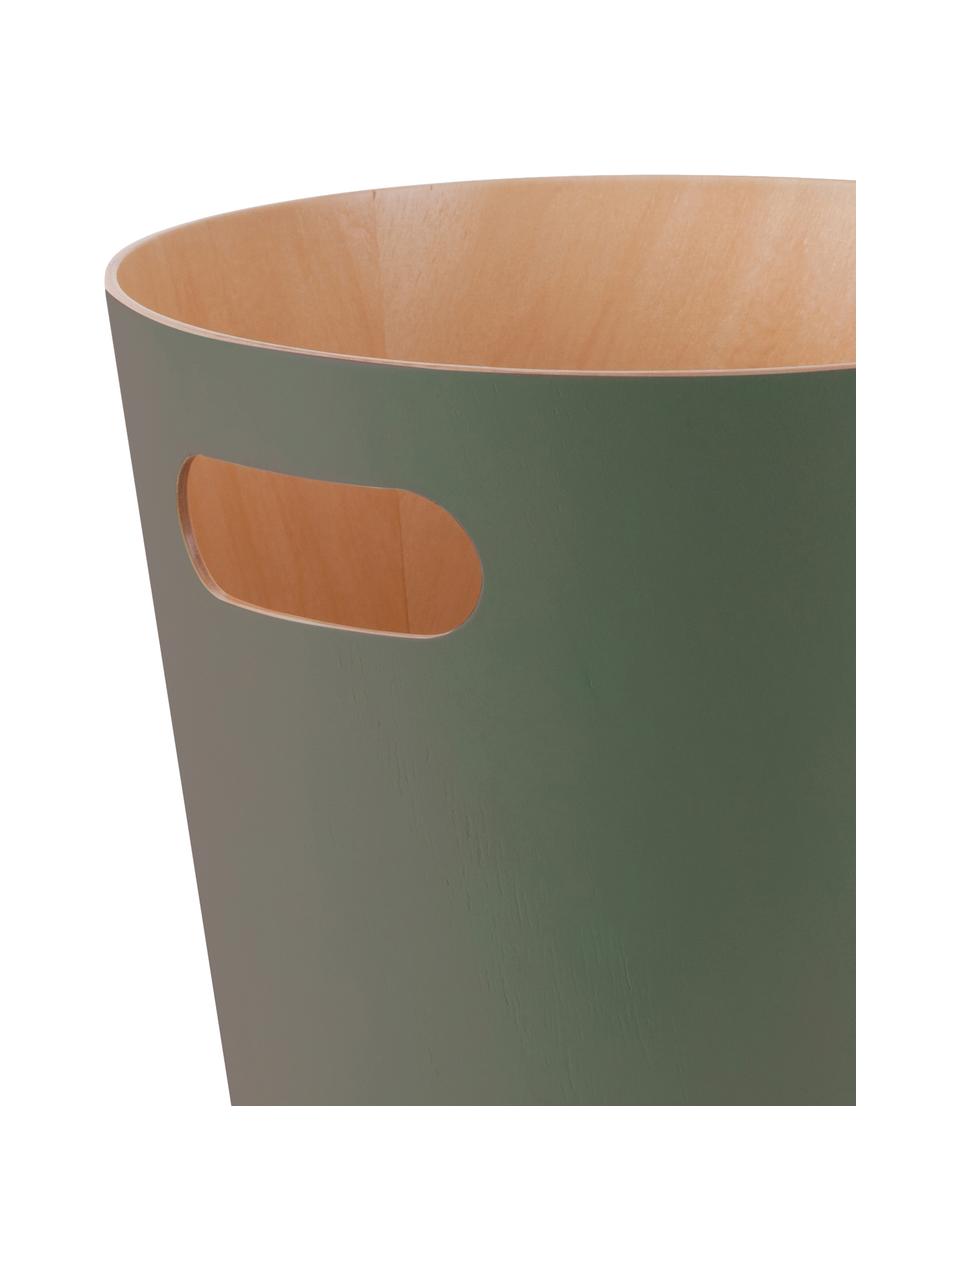 XS odpadkový kôš Woodrow Can, Lakované drevo, Olivovozelená, Ø 23, V 28 cm